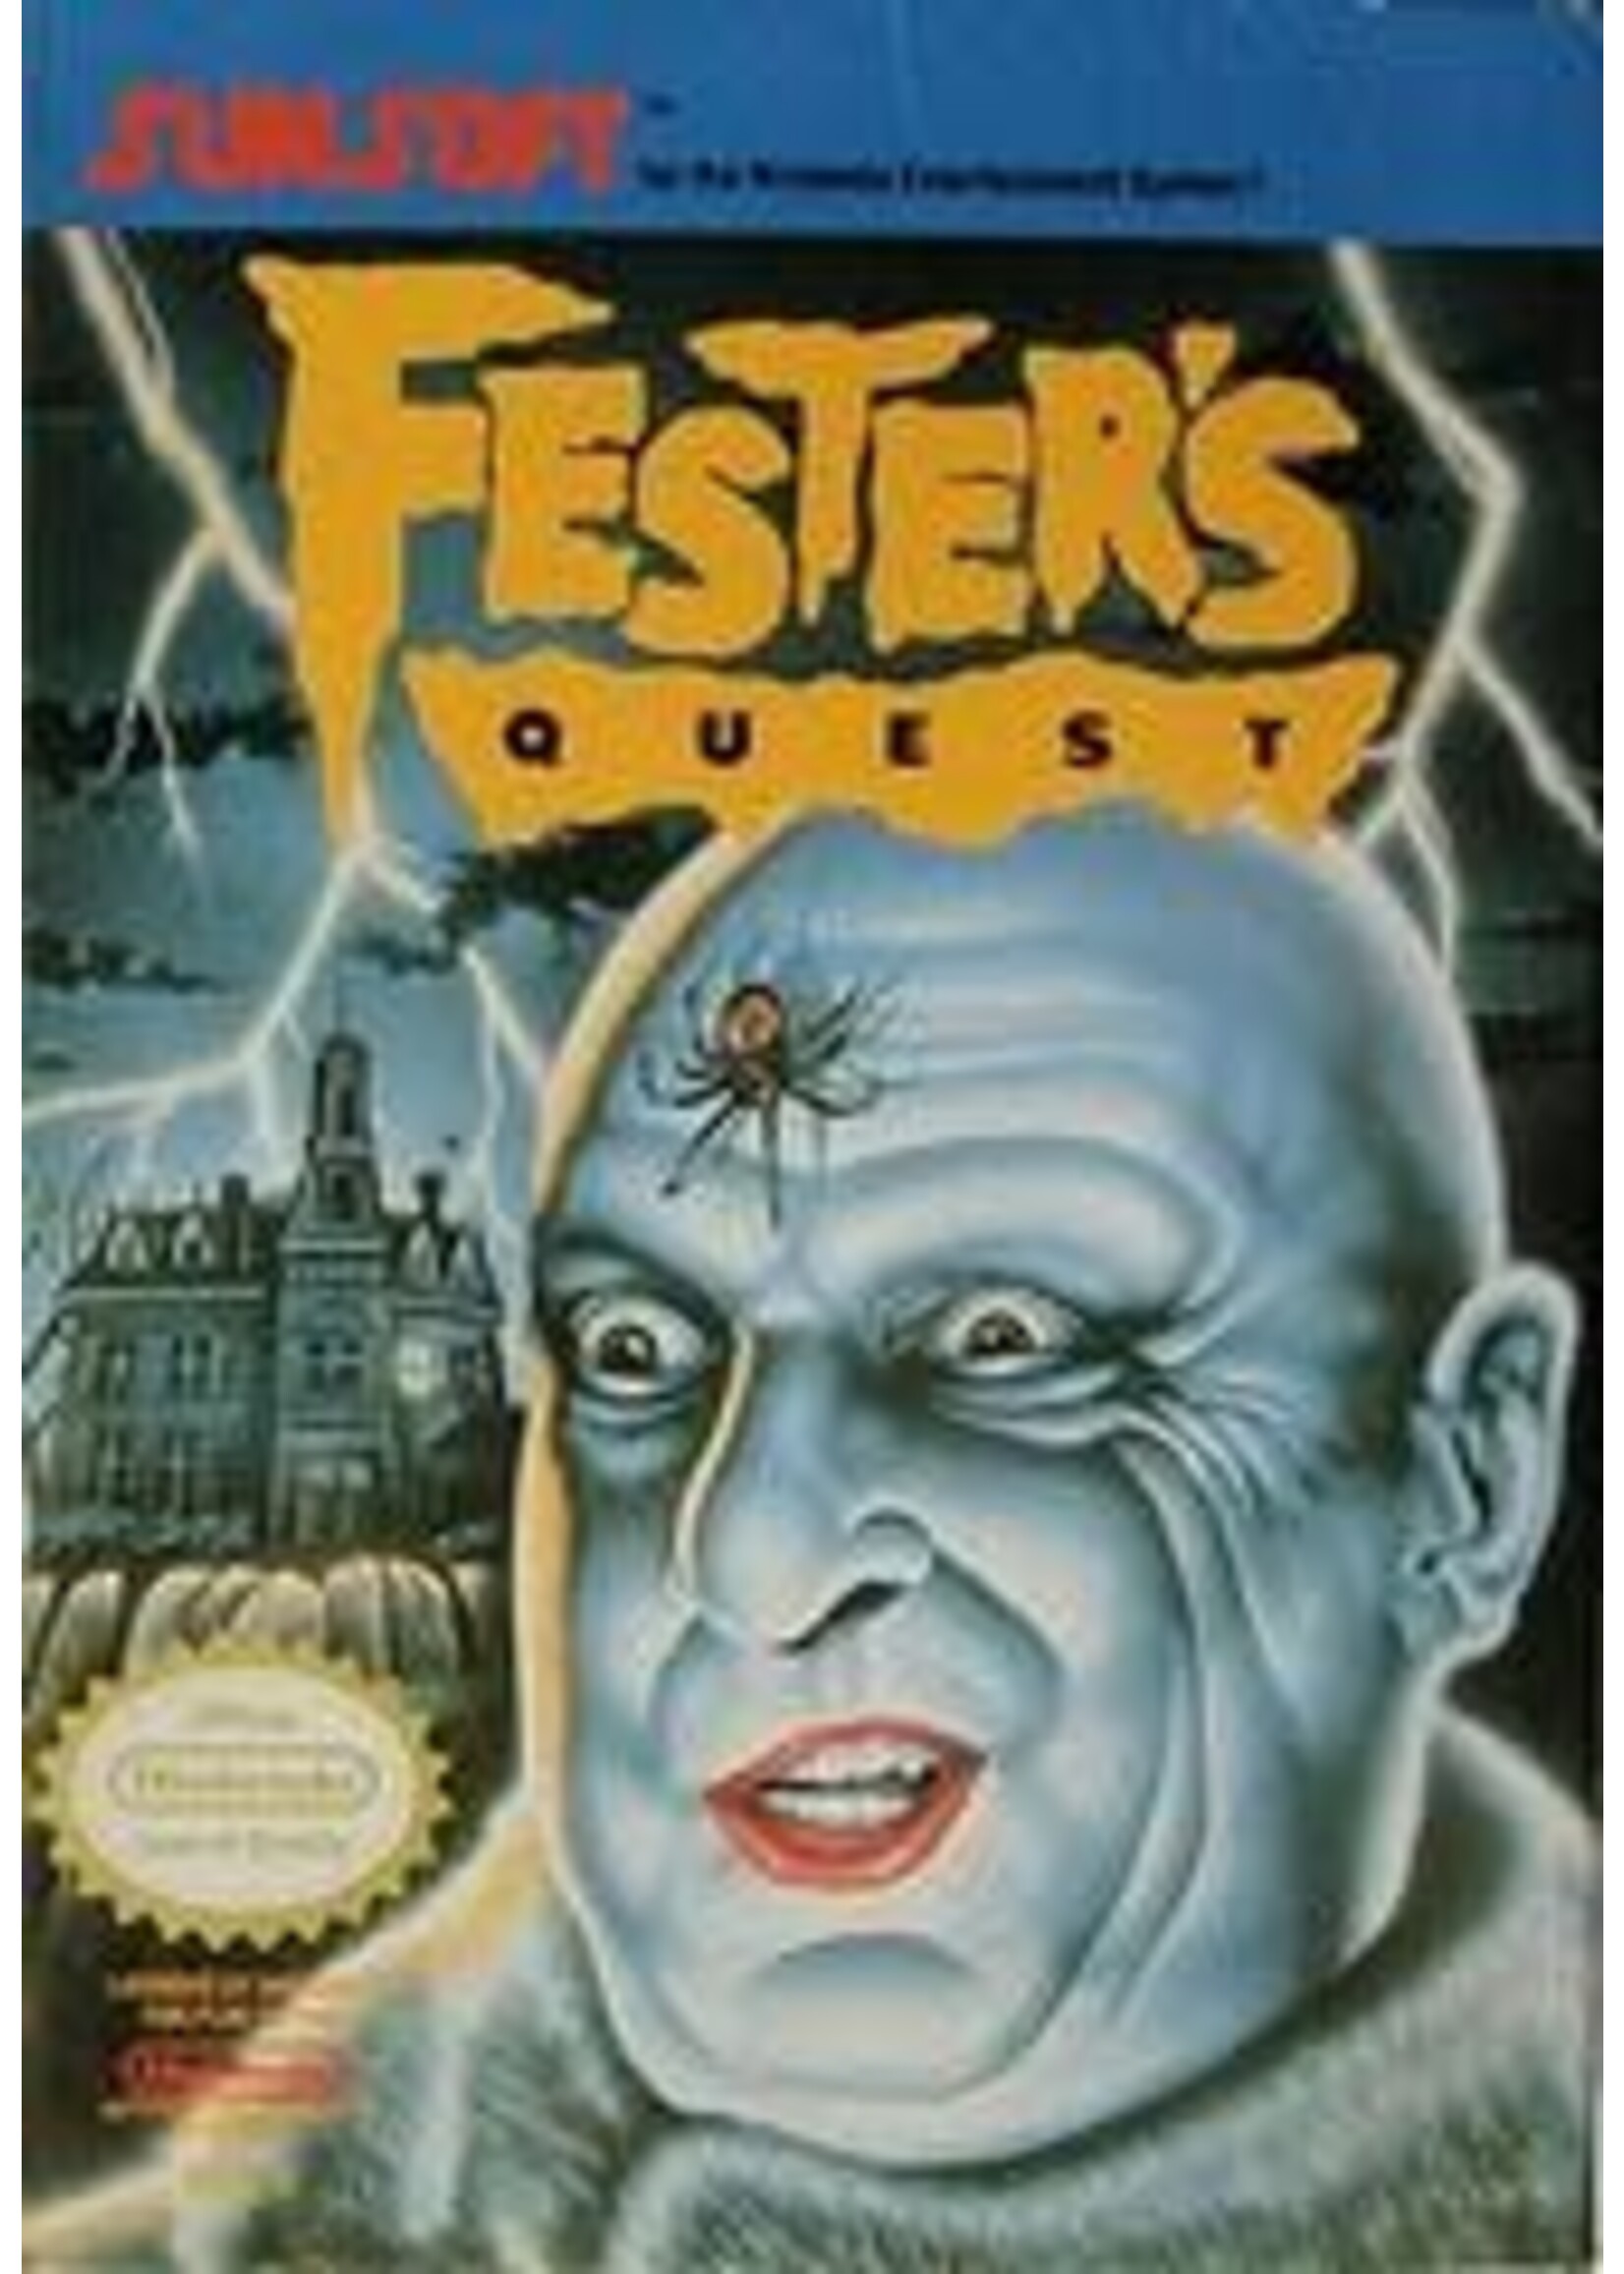 Fester's Quest NES CART ONLY